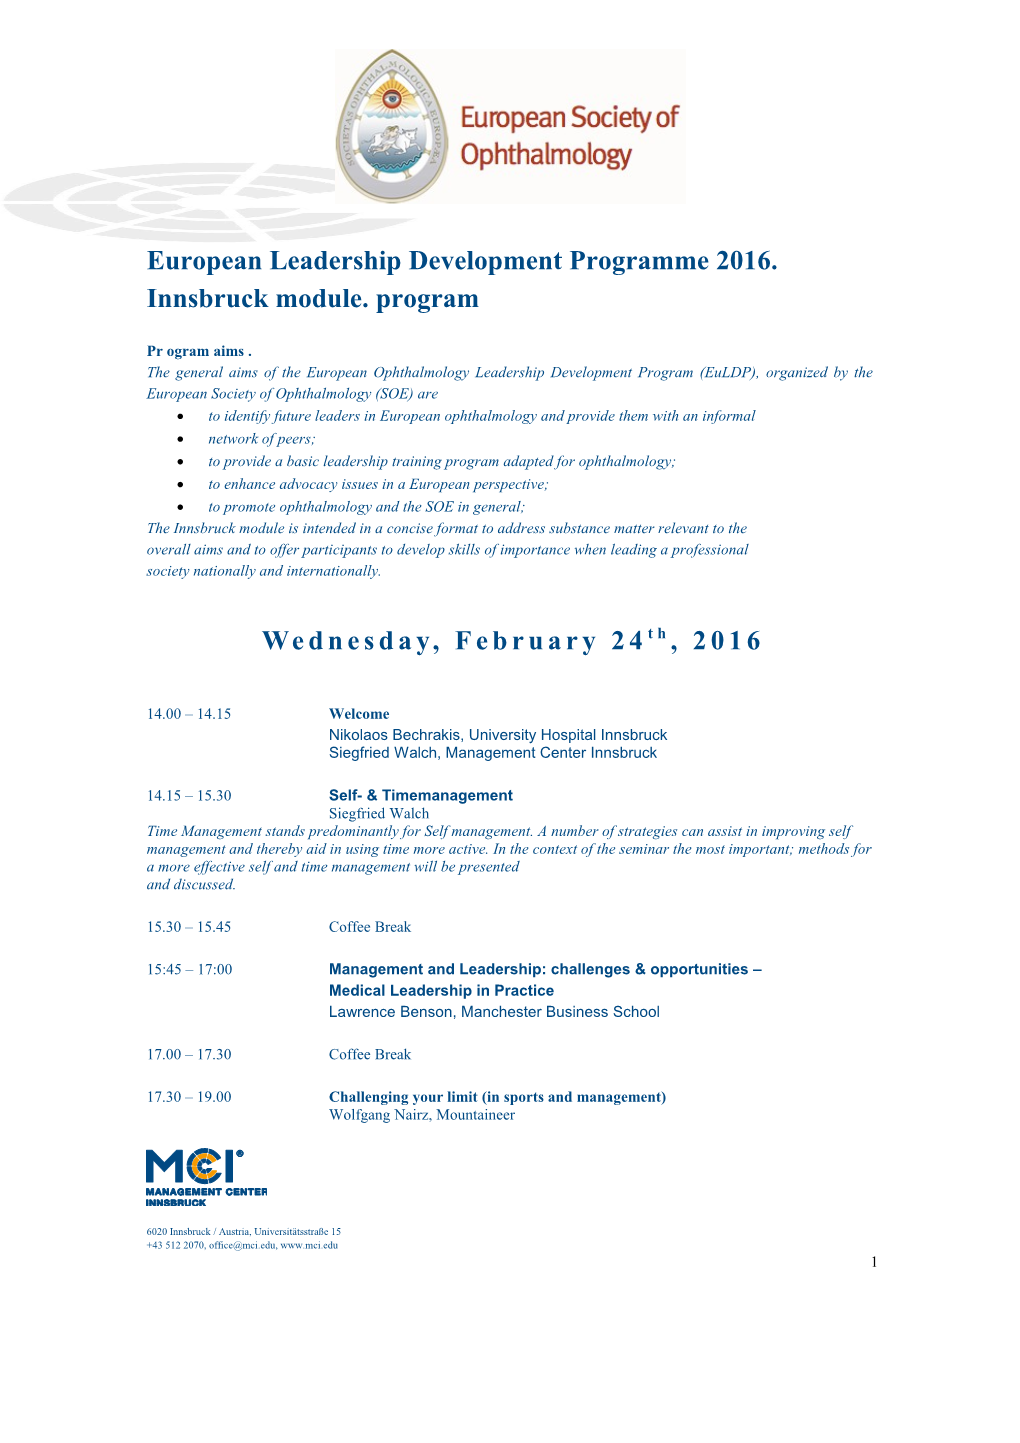 European Leadership Development Programme 2016.Innsbruck Module.Program